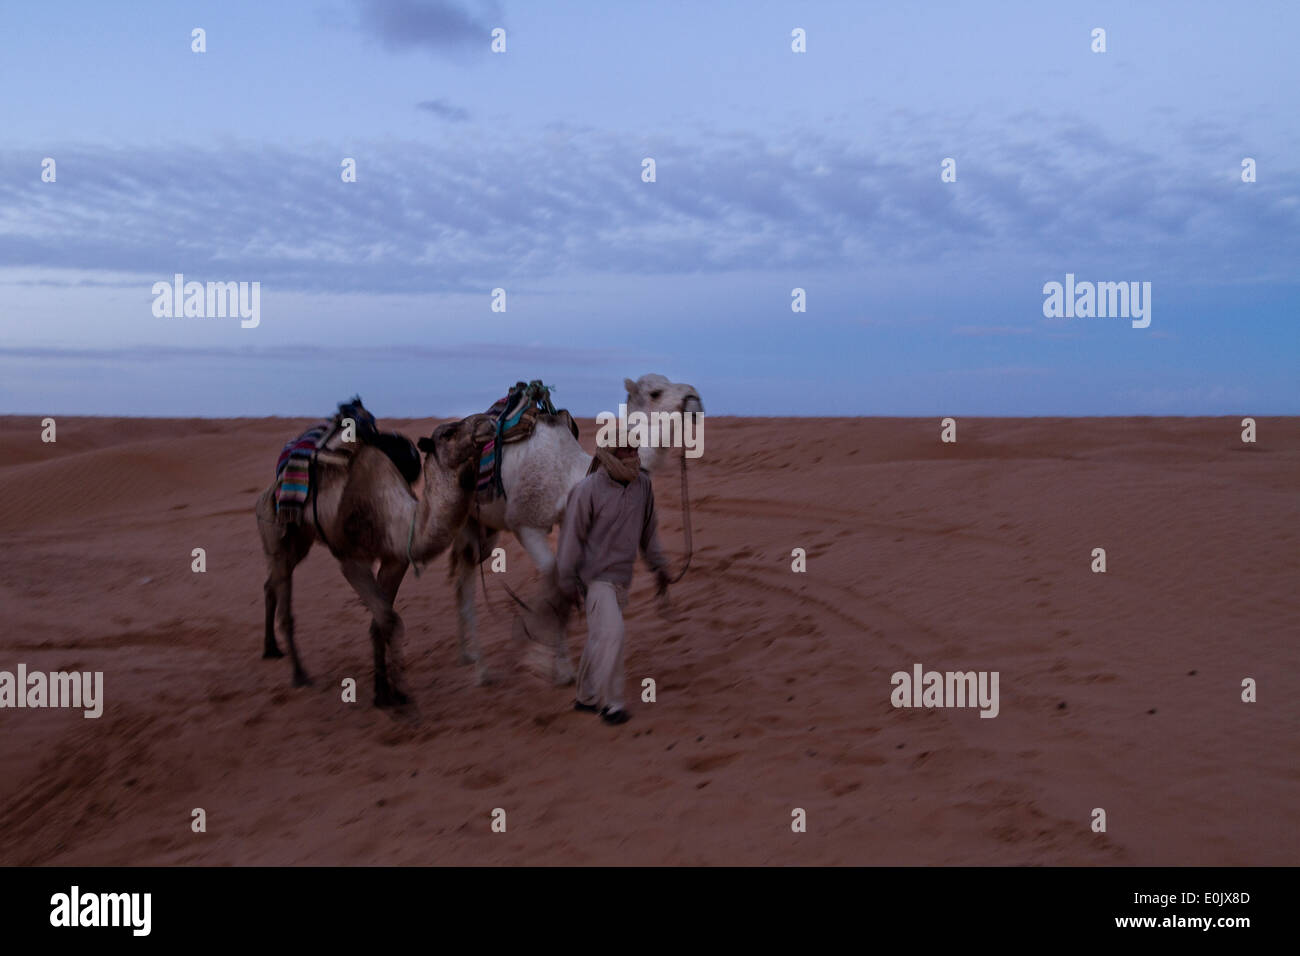 Camel and rider on Dunes in the Sahara desert, near Ksar ghilane. Stock Photo